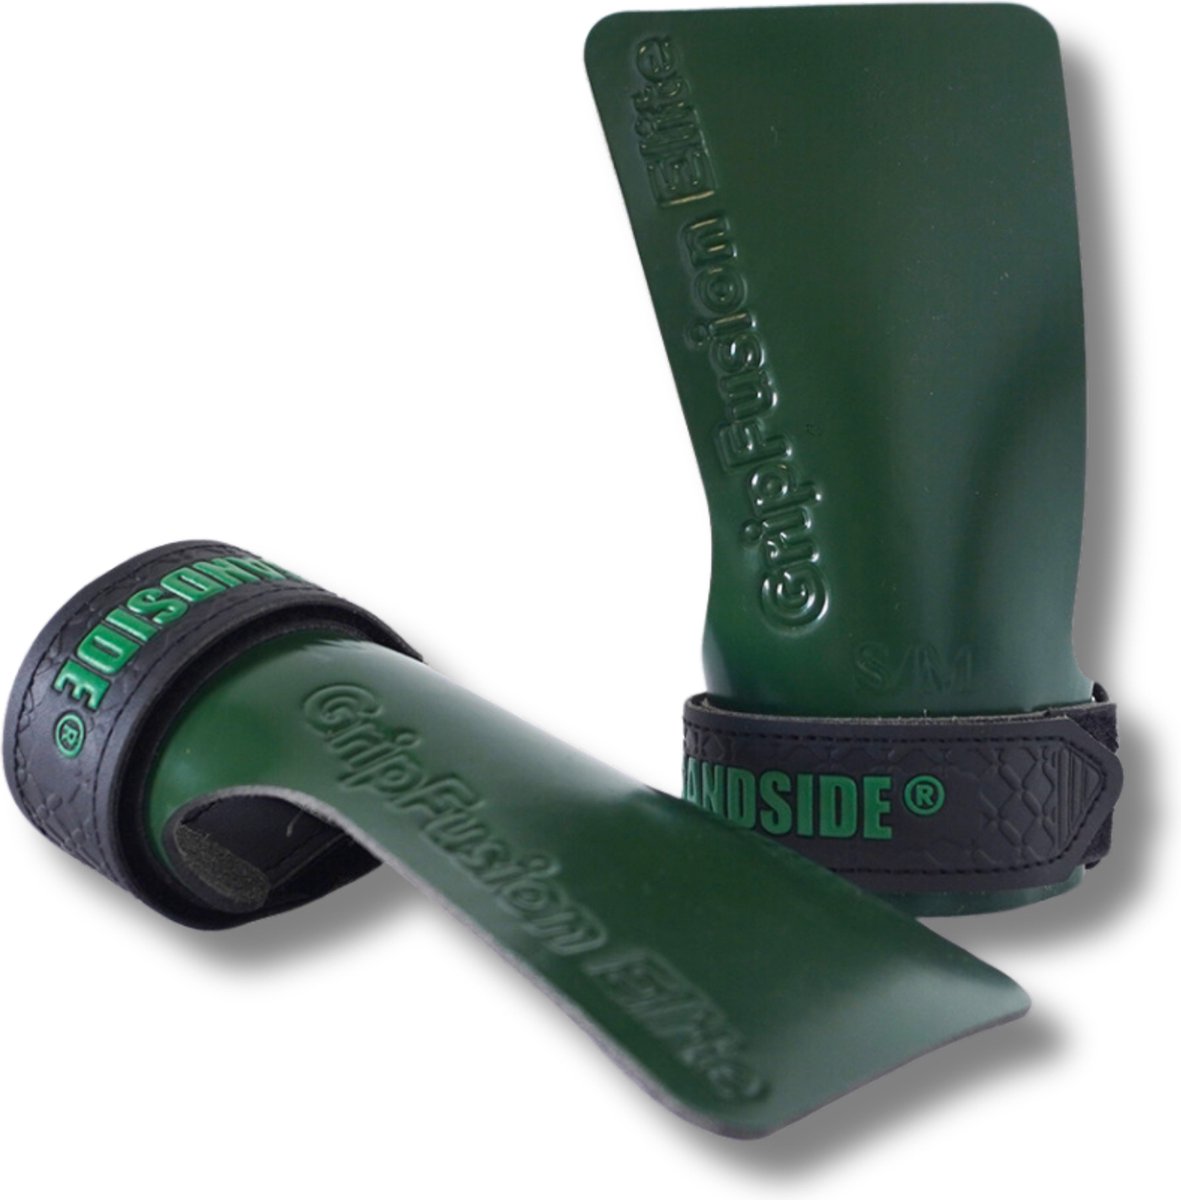 Sandside CrossFit Grips Elite 2.0 - Sticky Hand Grips - No Chalk - Fitness Handschoenen - Fingerless Grips - Army Green S/M